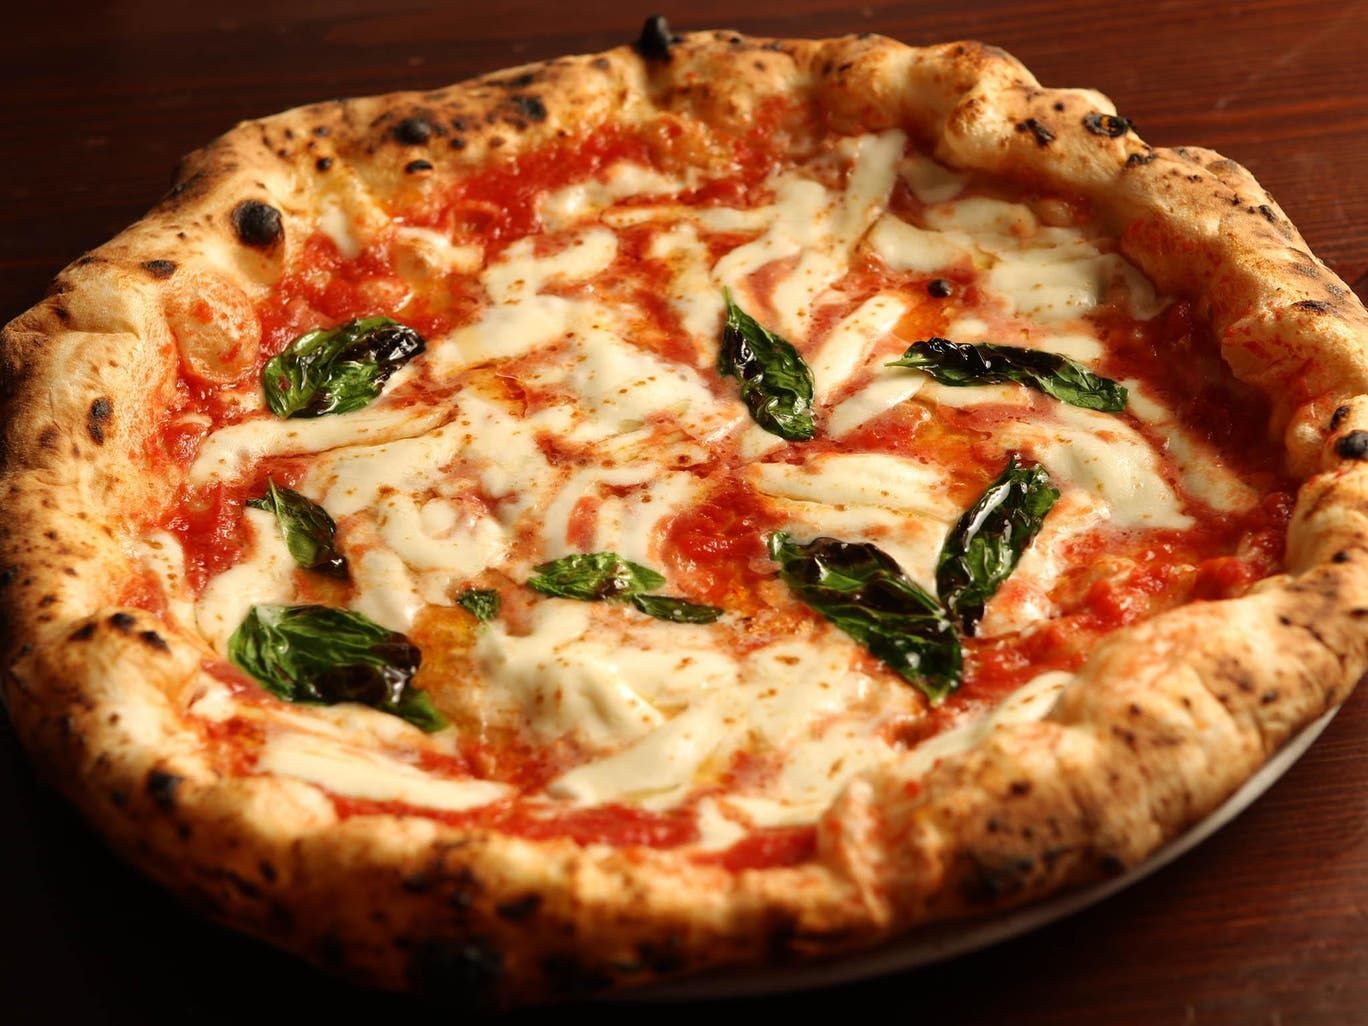 Restoran yang masuk '50 Pizza Top' di Eropa masih pertahankan harga murah